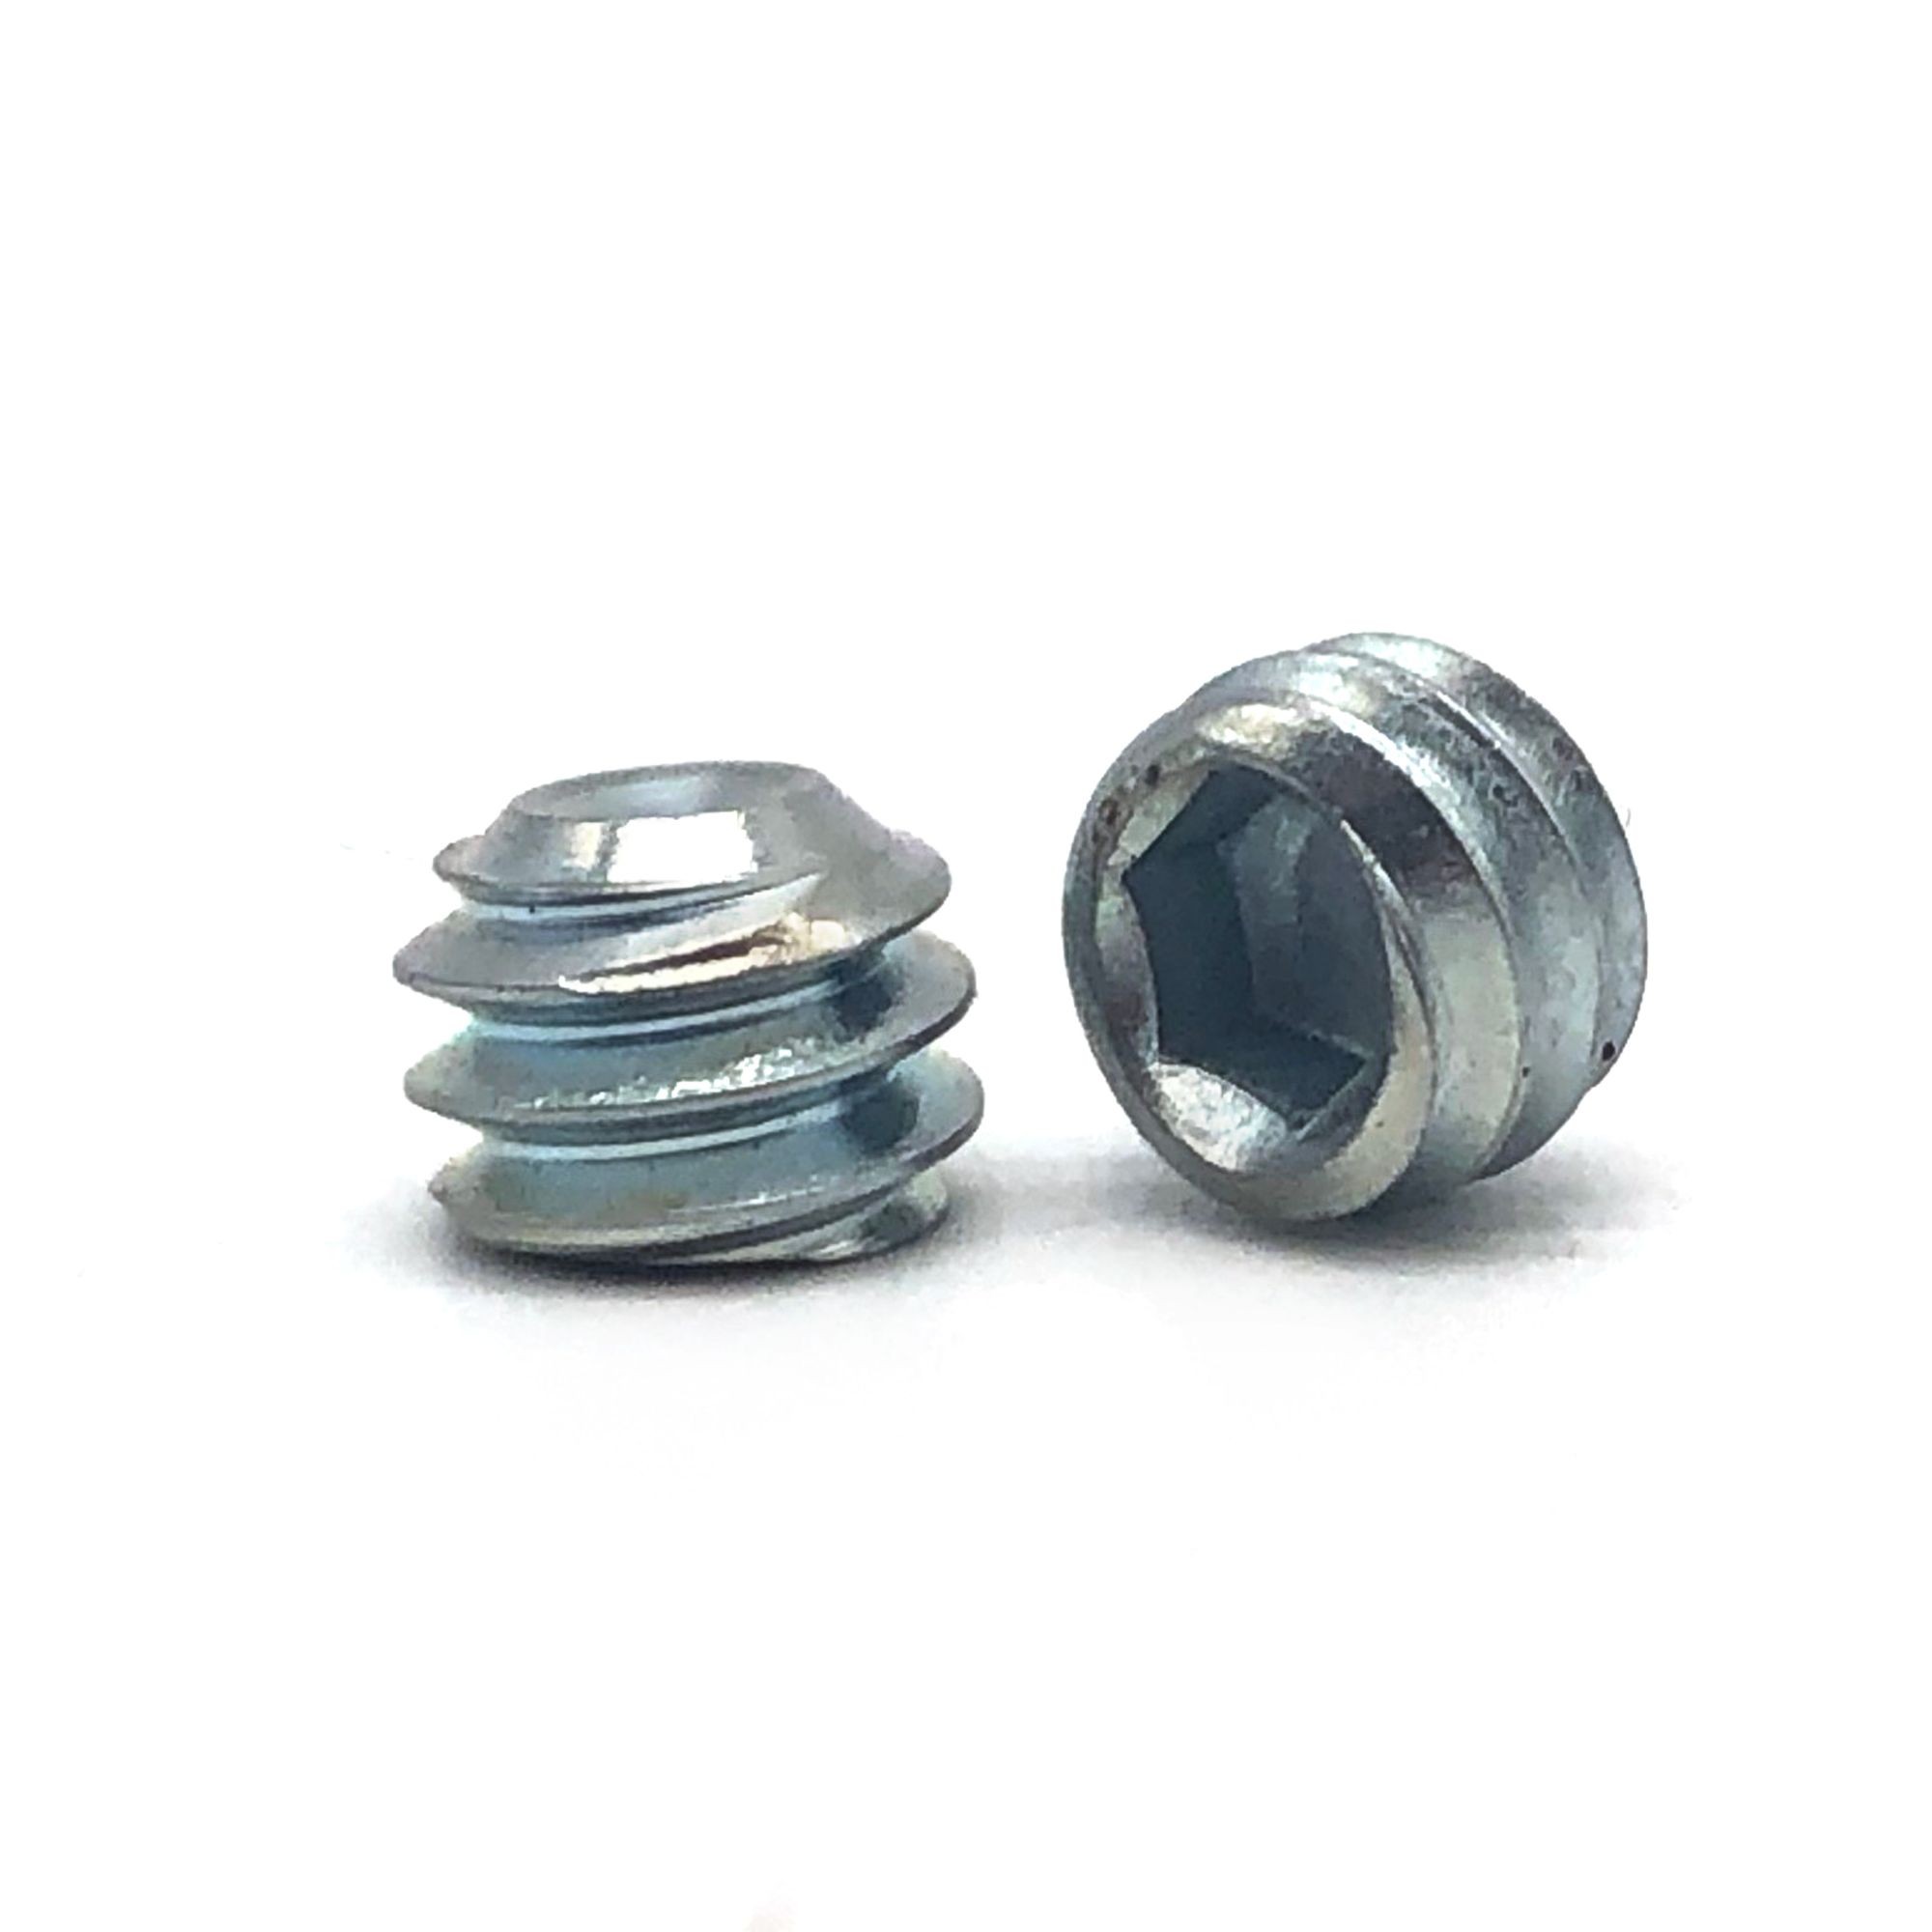 OEM customized size set screws Stainless simbi socket allen cap set screws